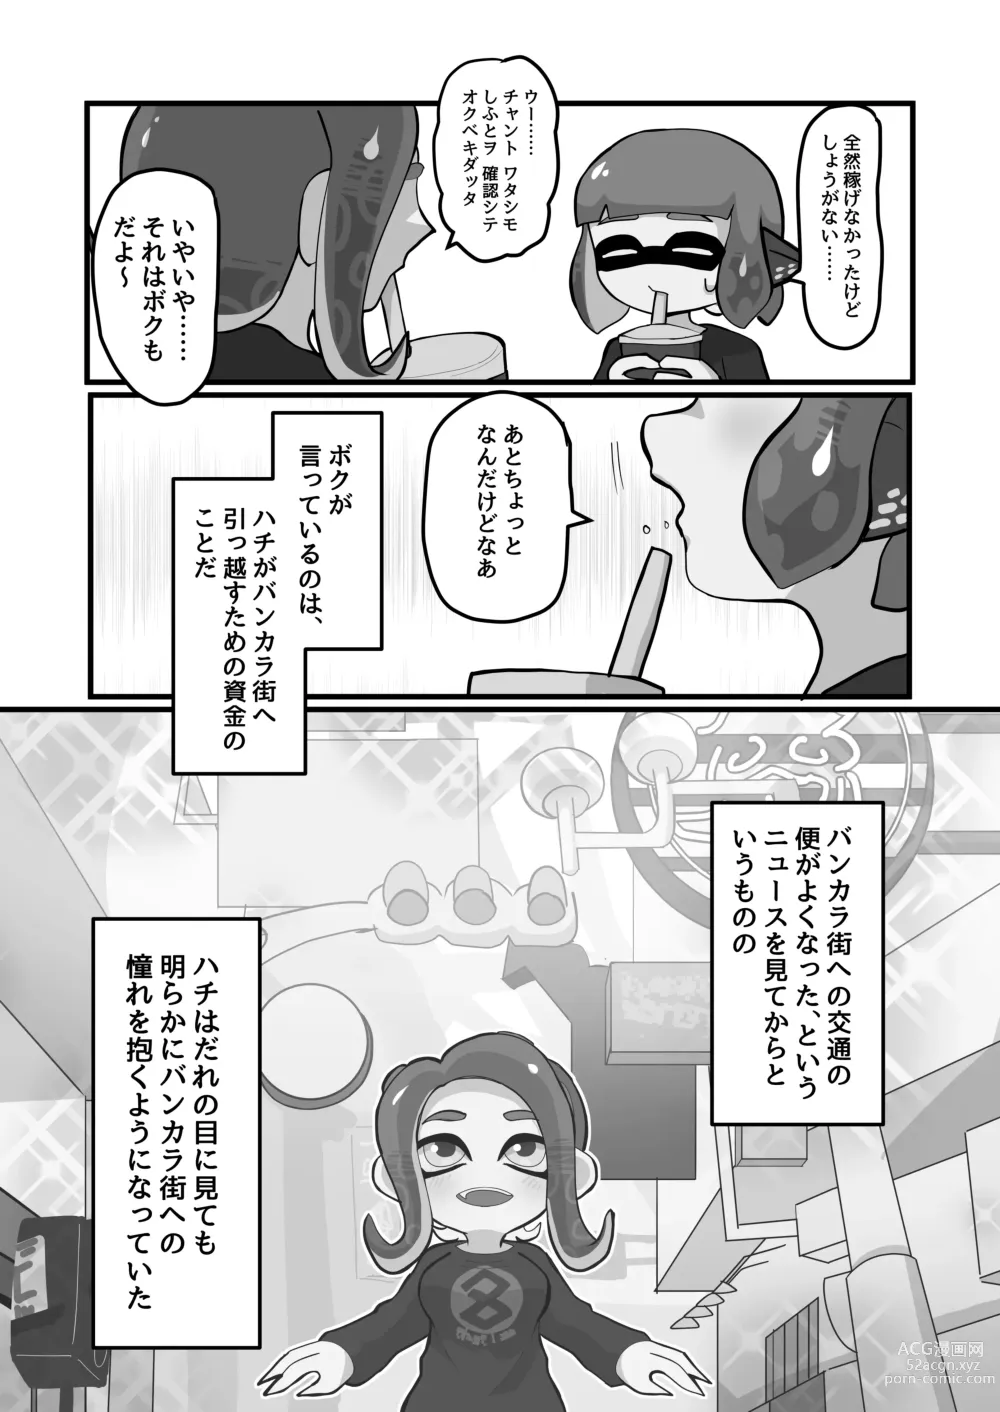 Page 4 of doujinshi Mimacari Hero